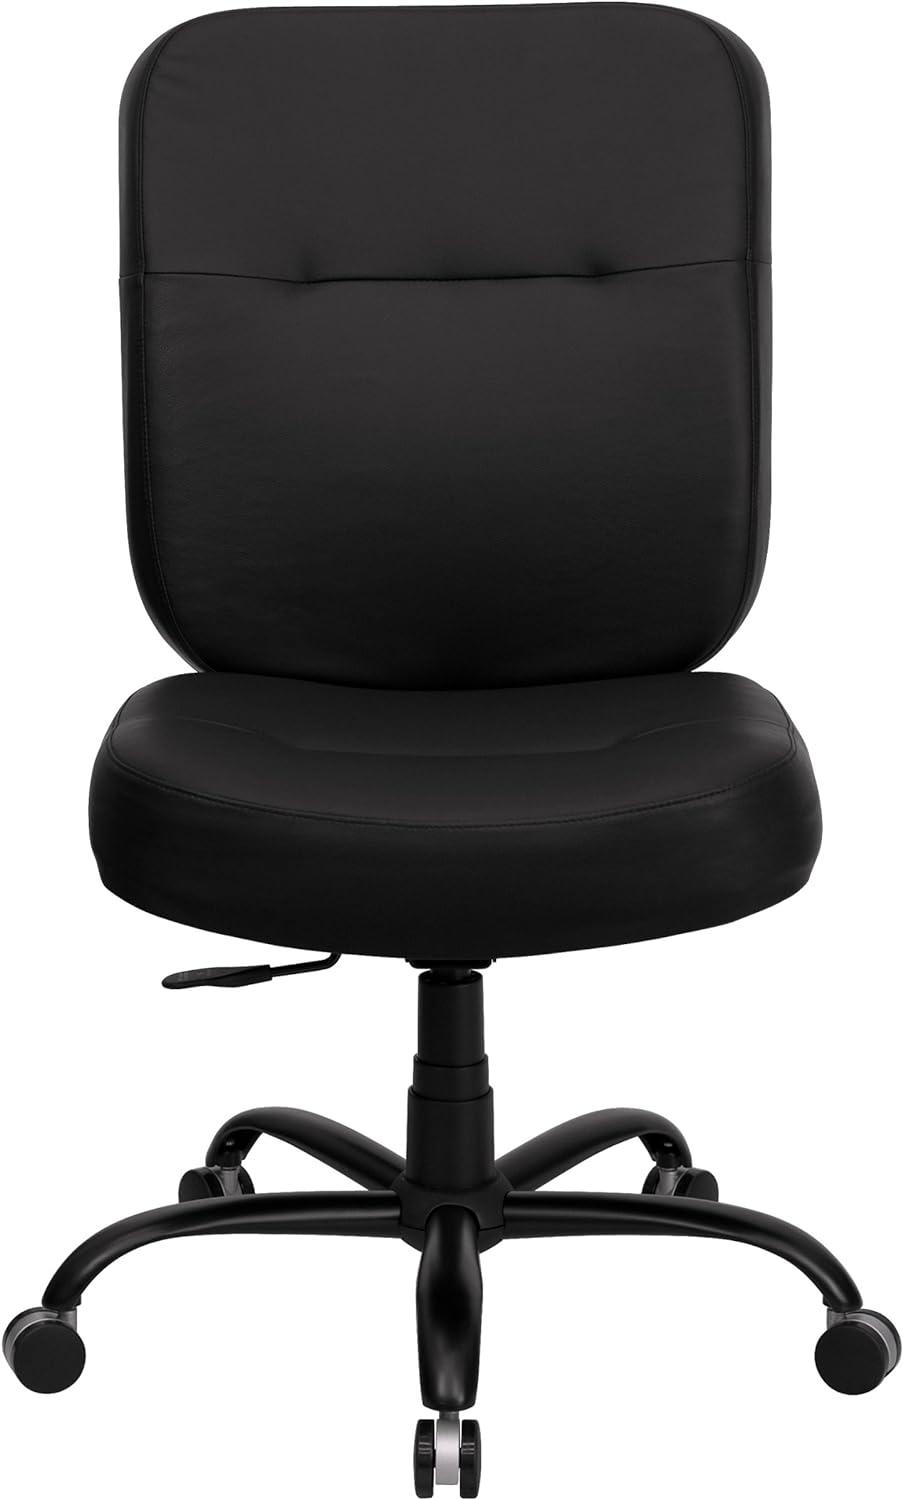 Hercules High-Back Black LeatherSoft Executive Swivel Chair